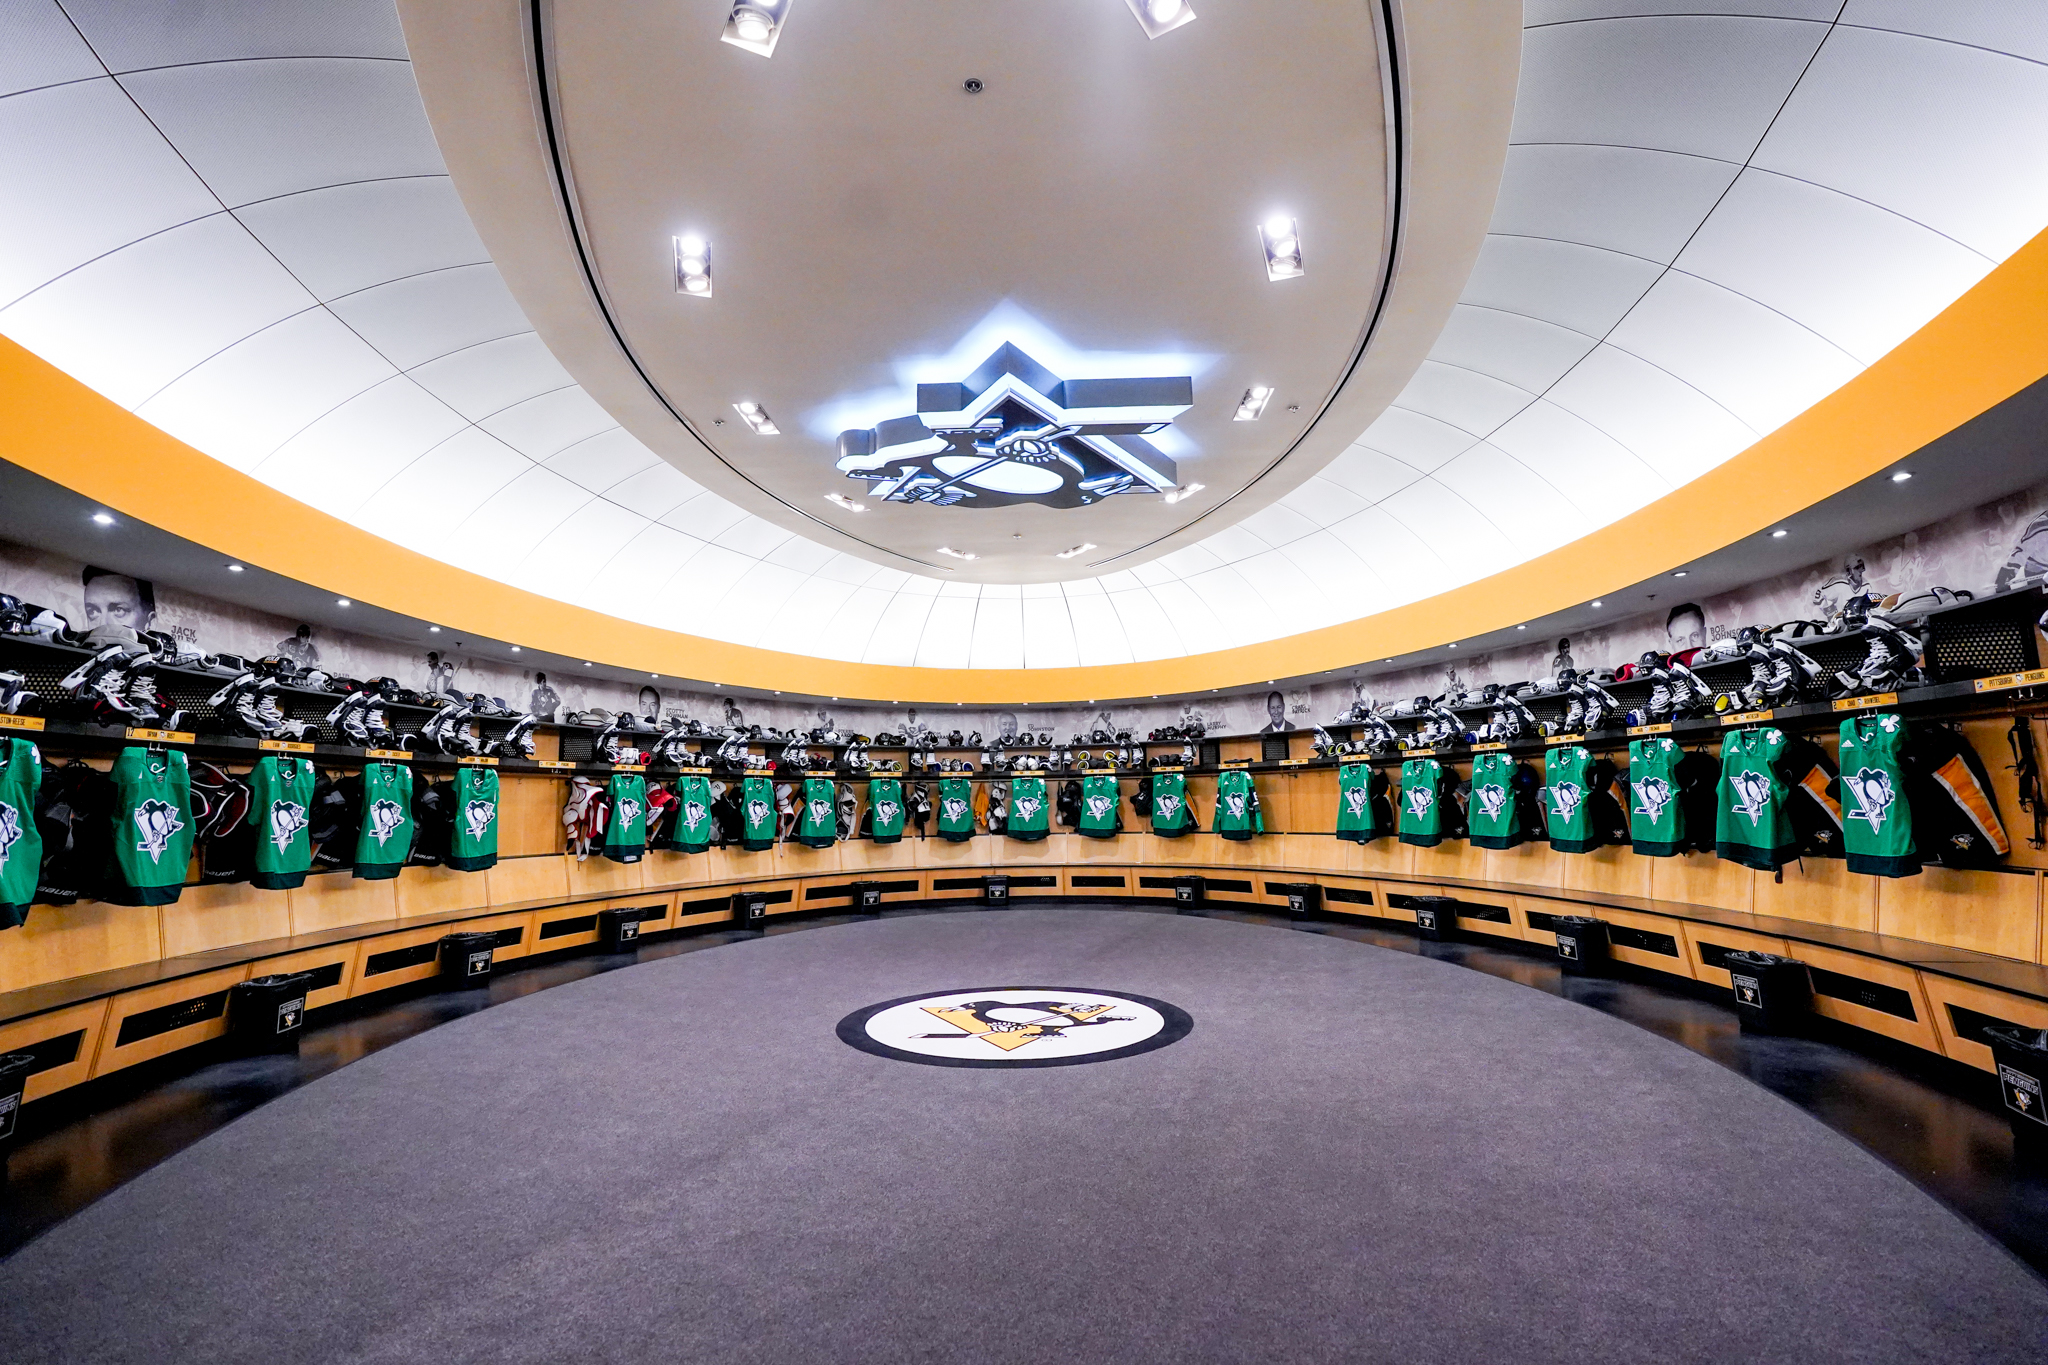 Pittsburgh Penguins on X: Mean green scoring machines. Bid more